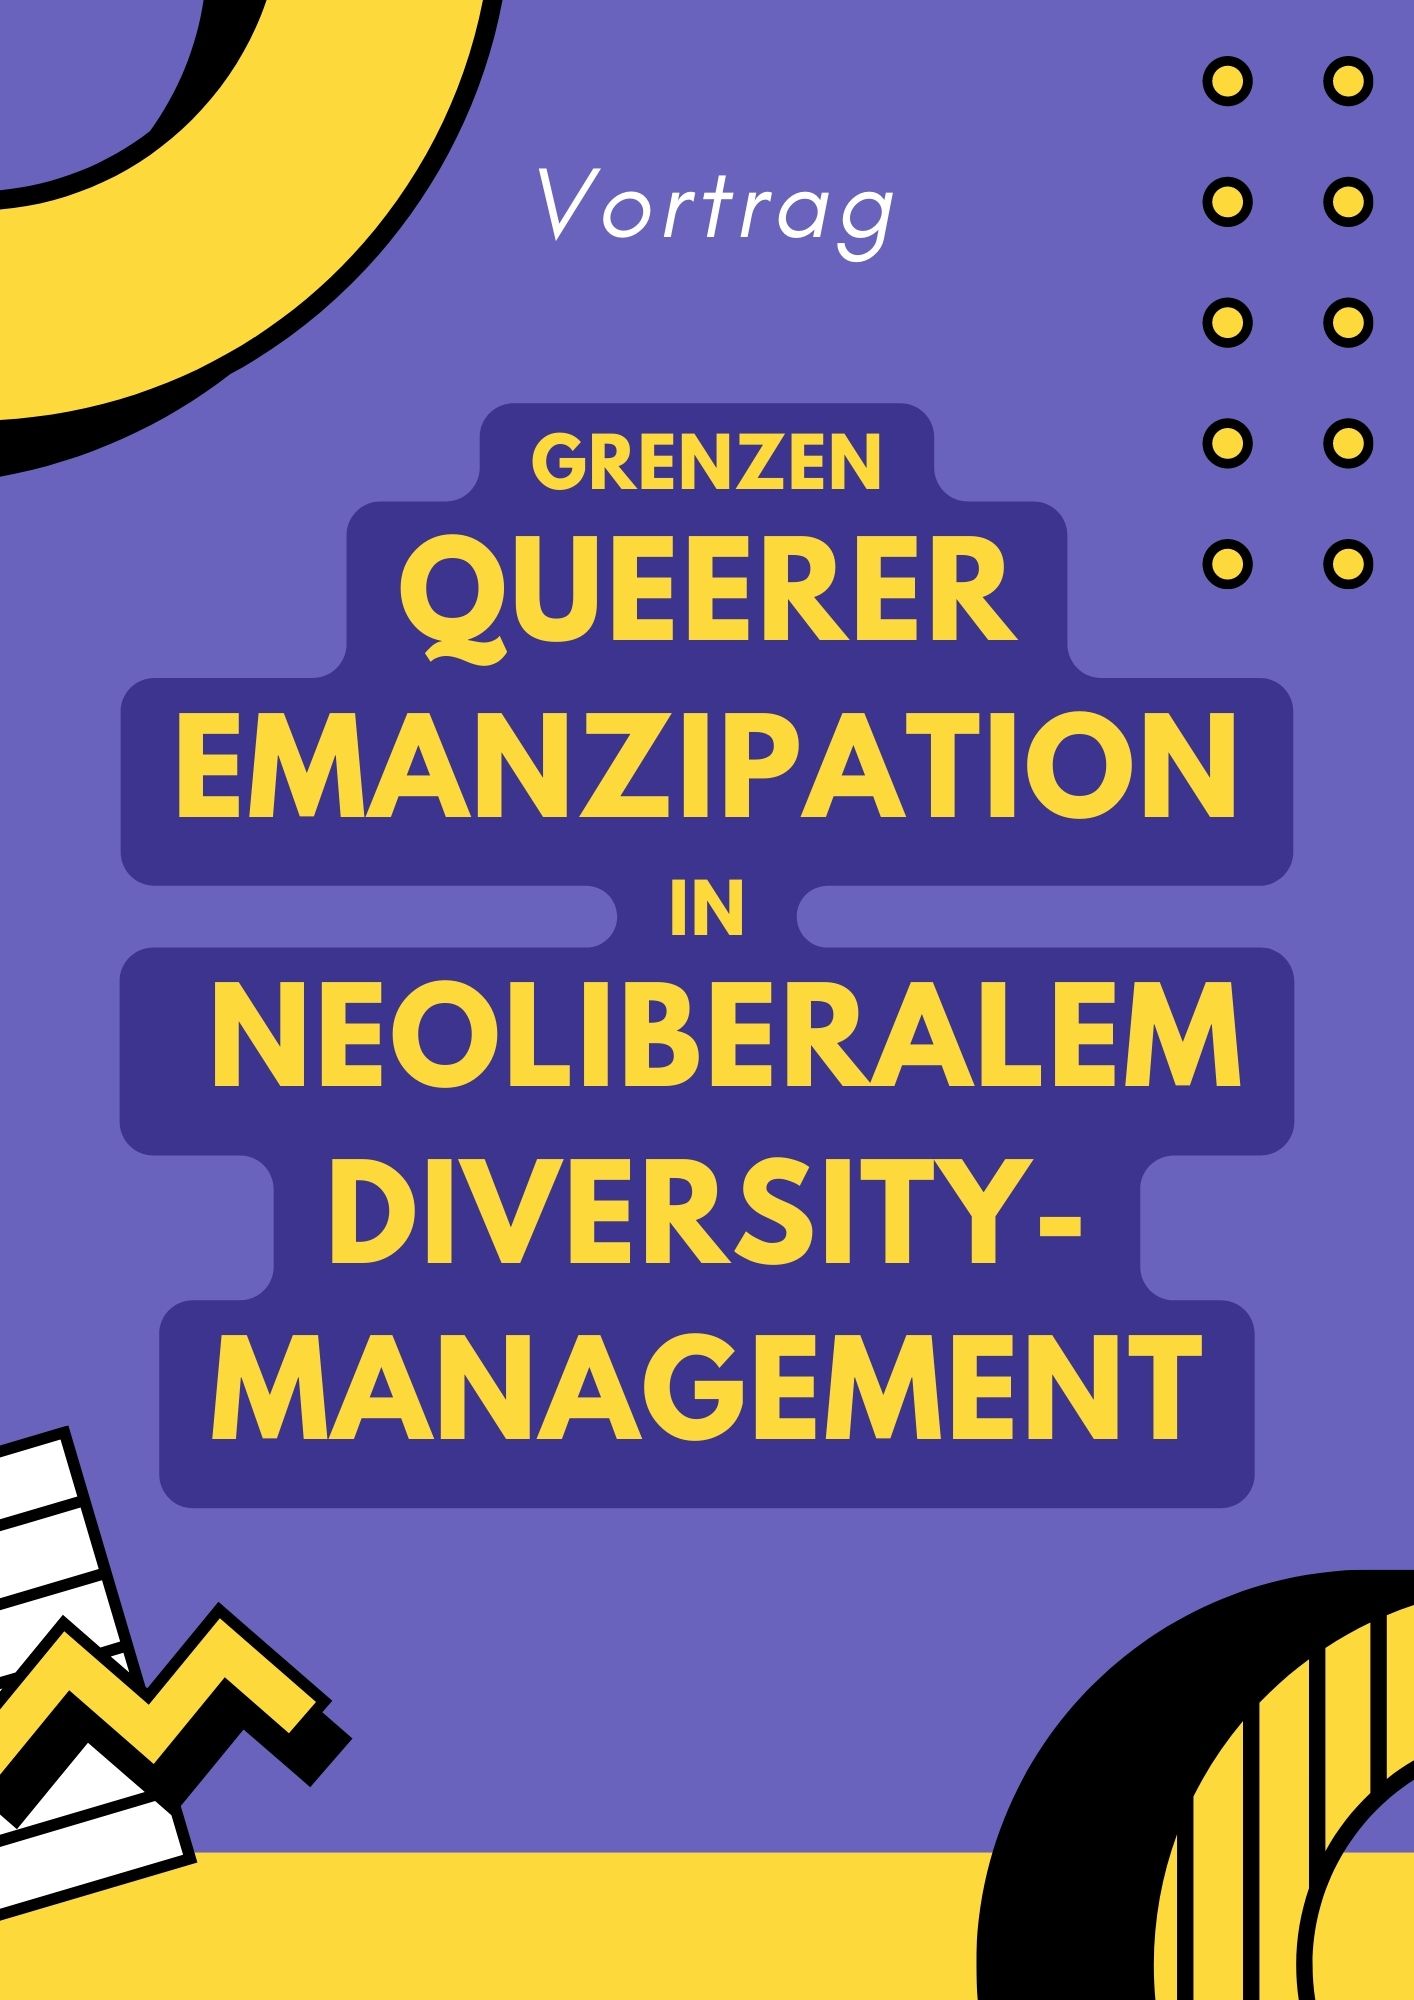 Vortrag: Grenzen queerer Emanzipation in neoliberalem Diversity-Management